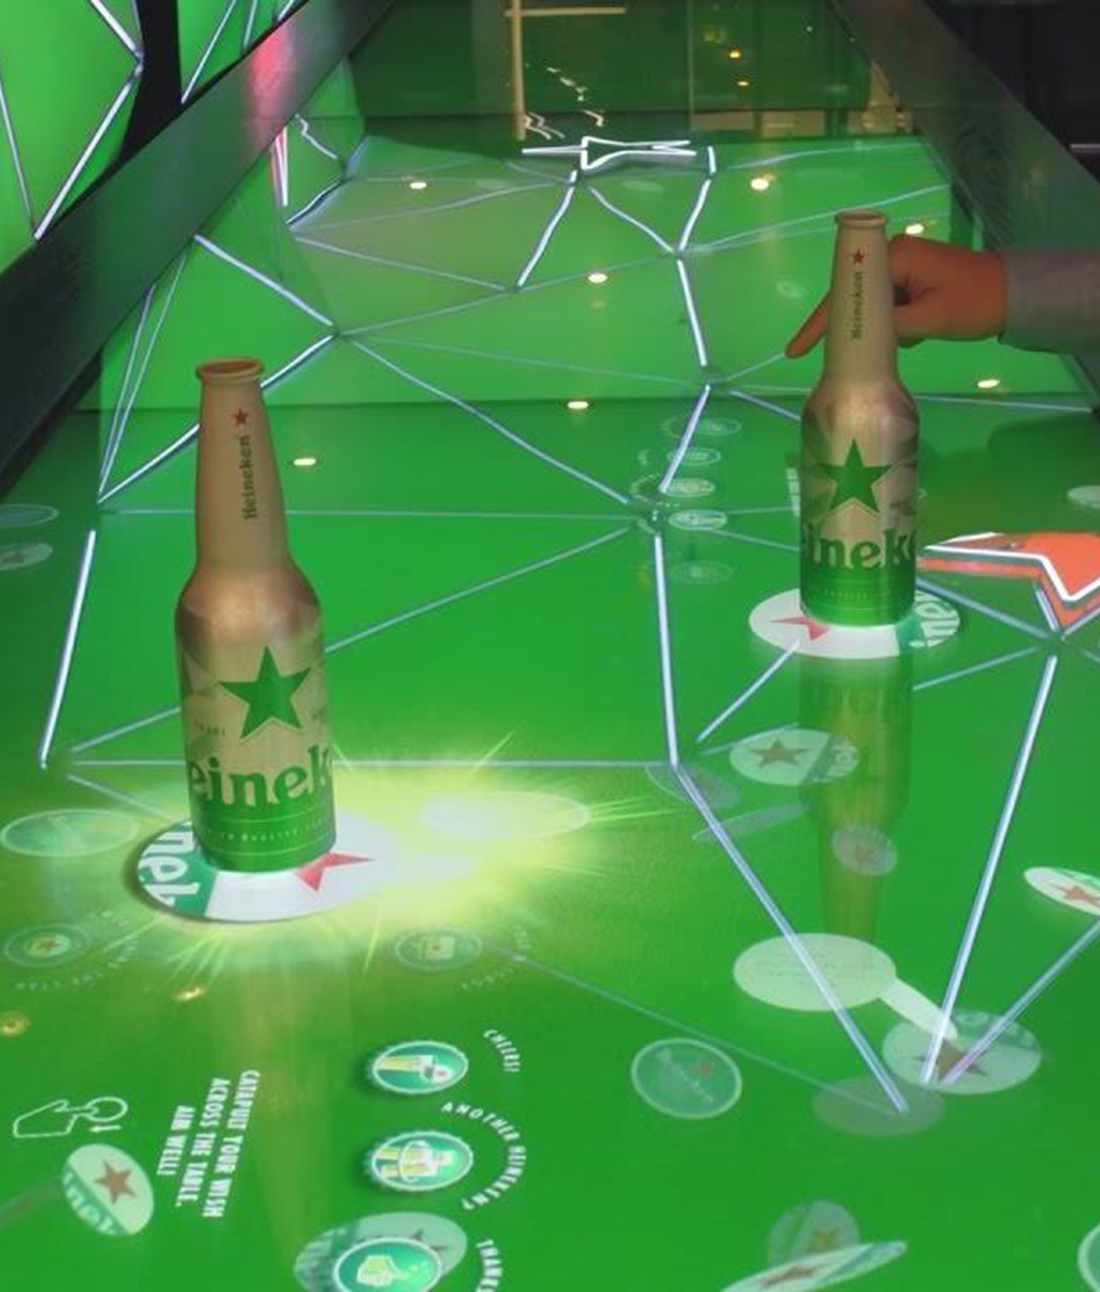 Heineken-bar-table-test-play